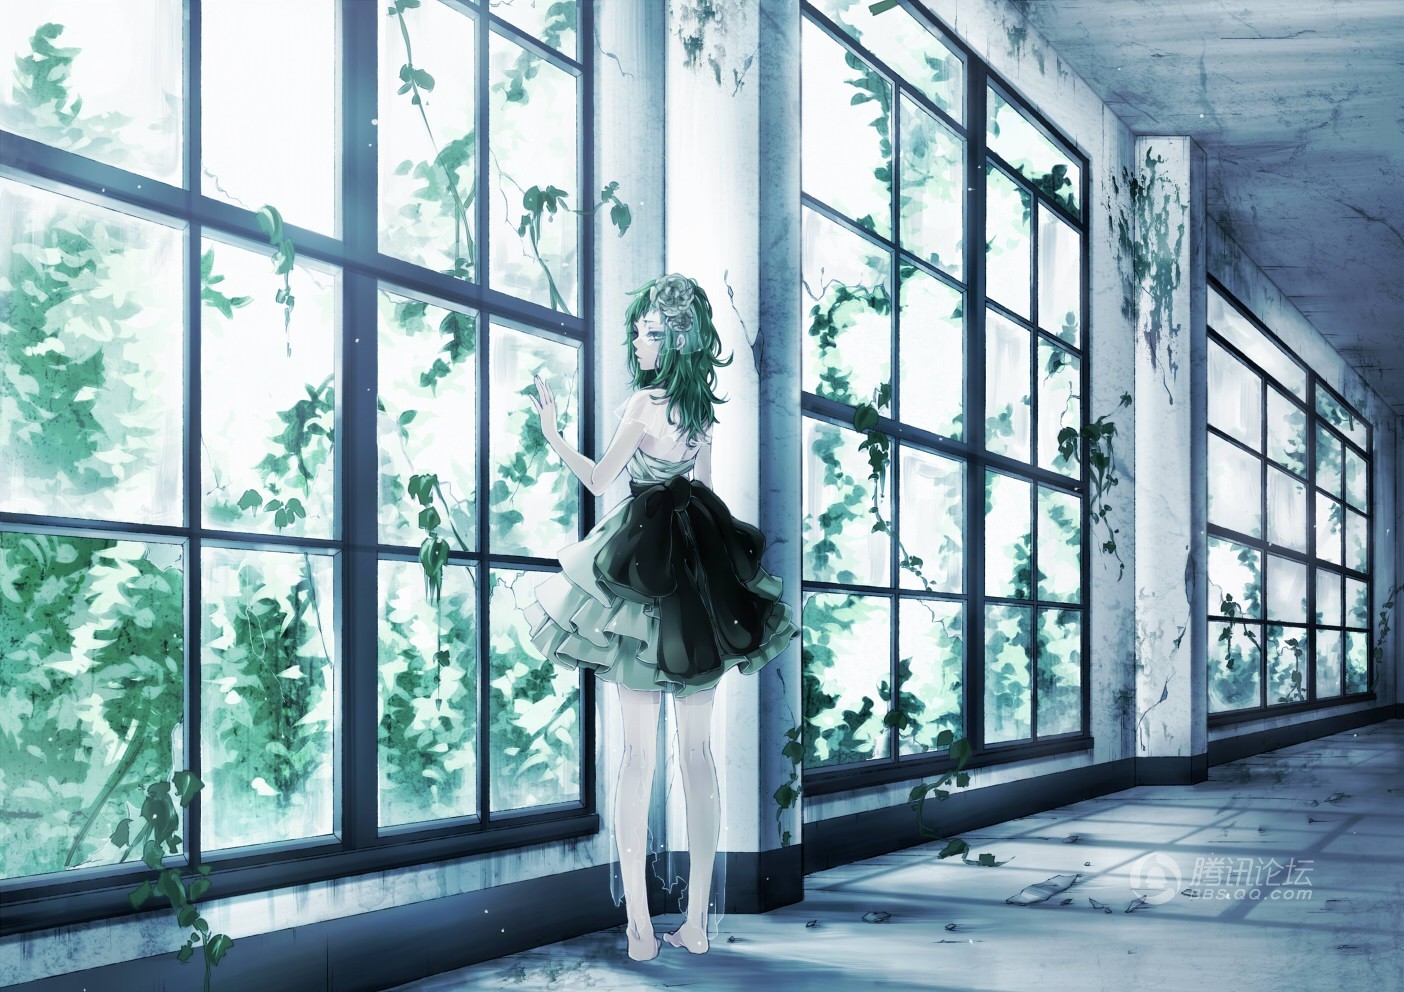 Anime 1404x992 anime window Vocaloid Megpoid Gumi dress green hair by the window anime girls standing plants barefoot